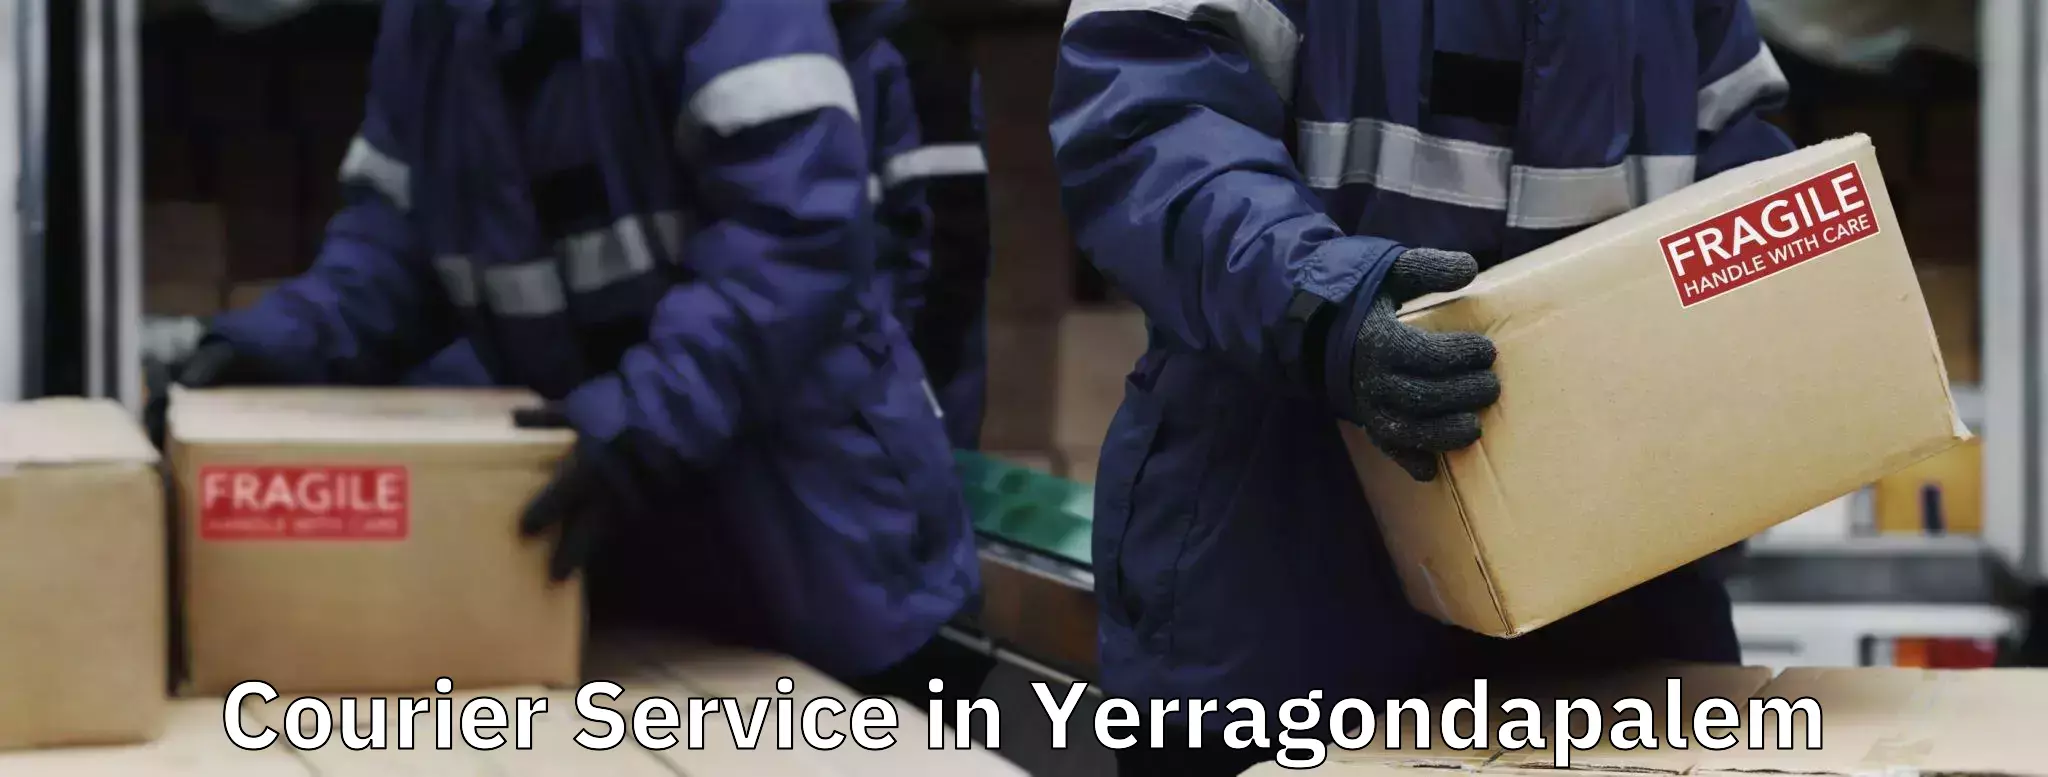 Enhanced shipping experience in Yerragondapalem